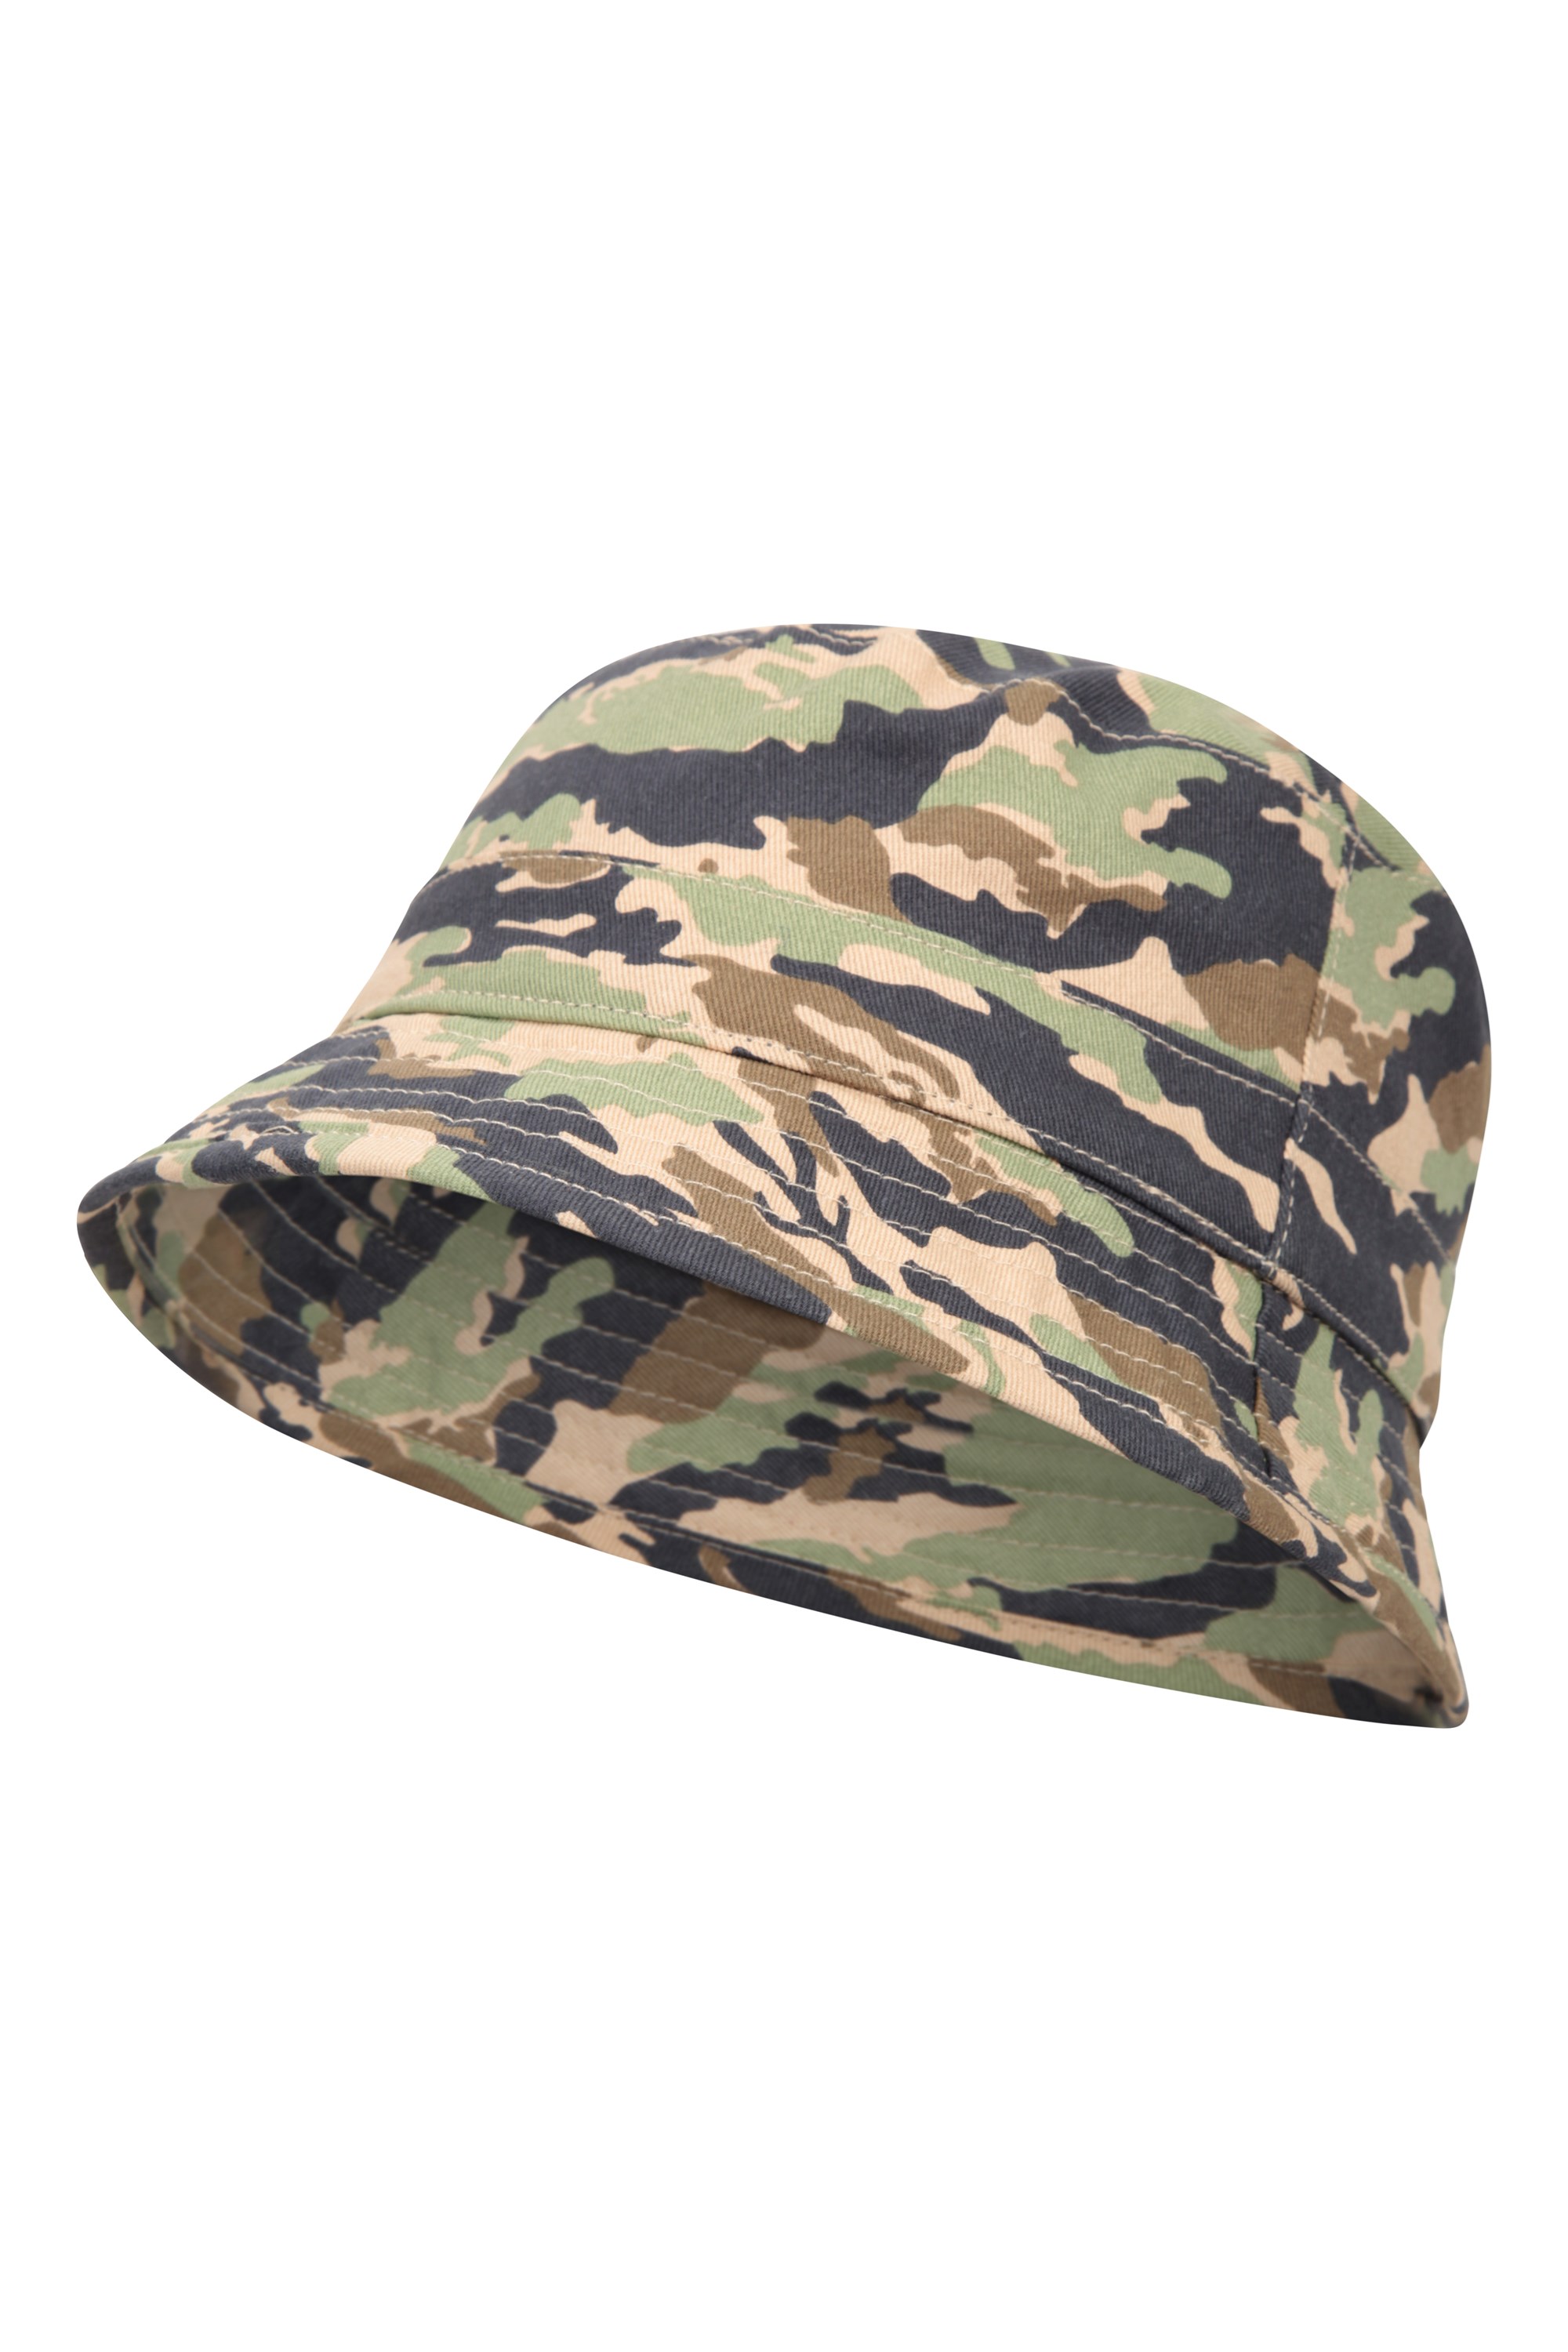 Mountain Warehouse Kids Camo Bucket Hat - Green | Size M